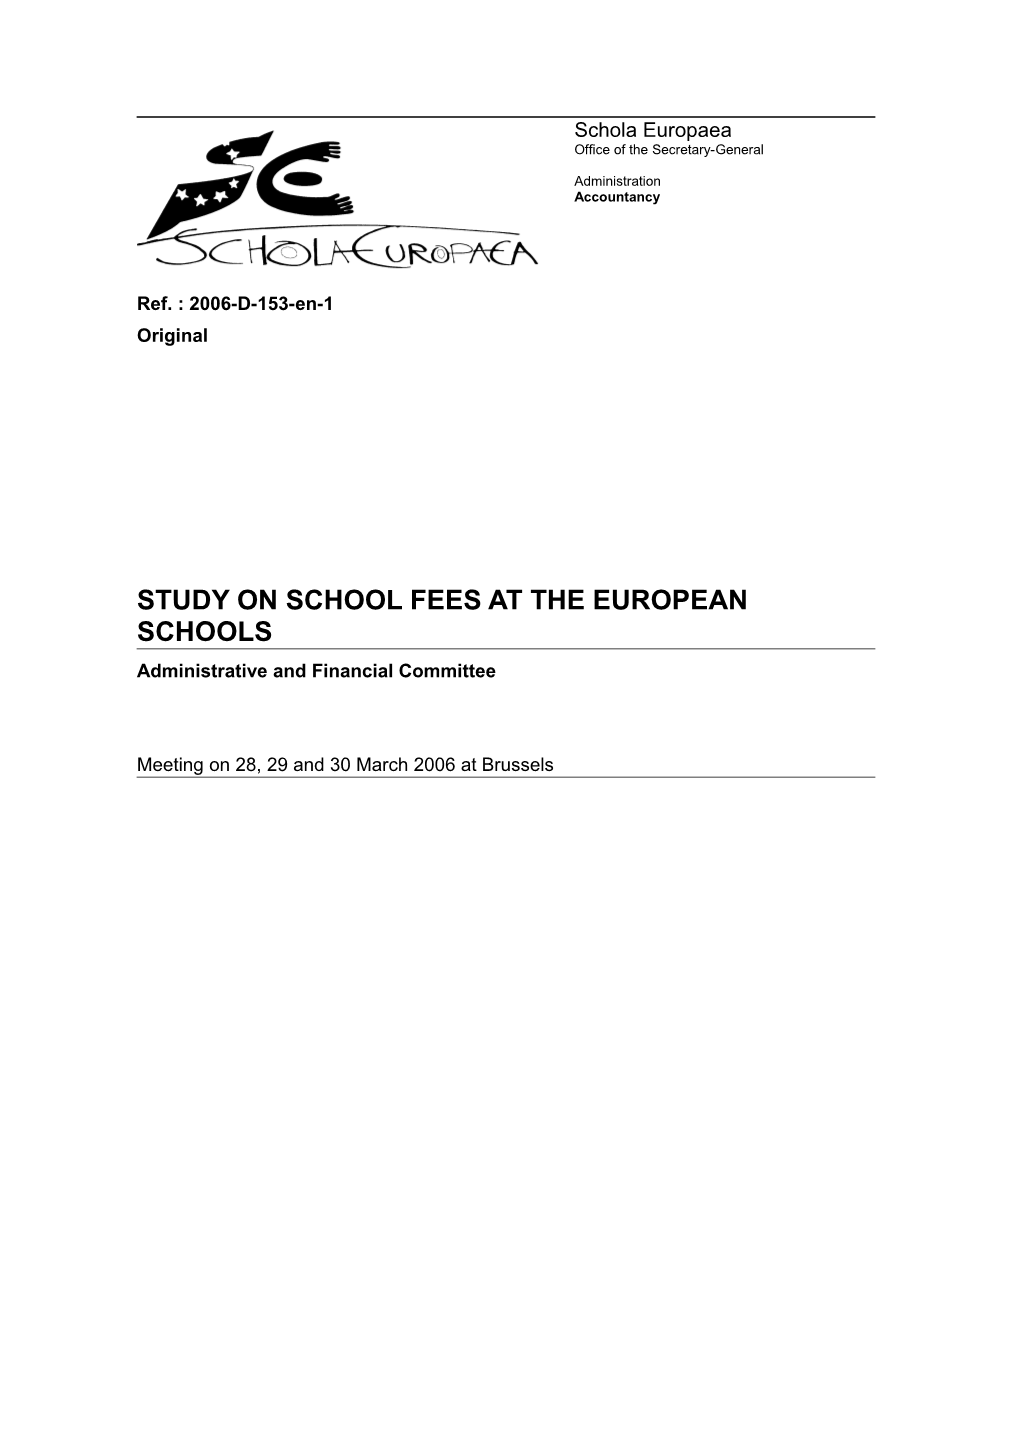 Study on School Fees at the European Schools